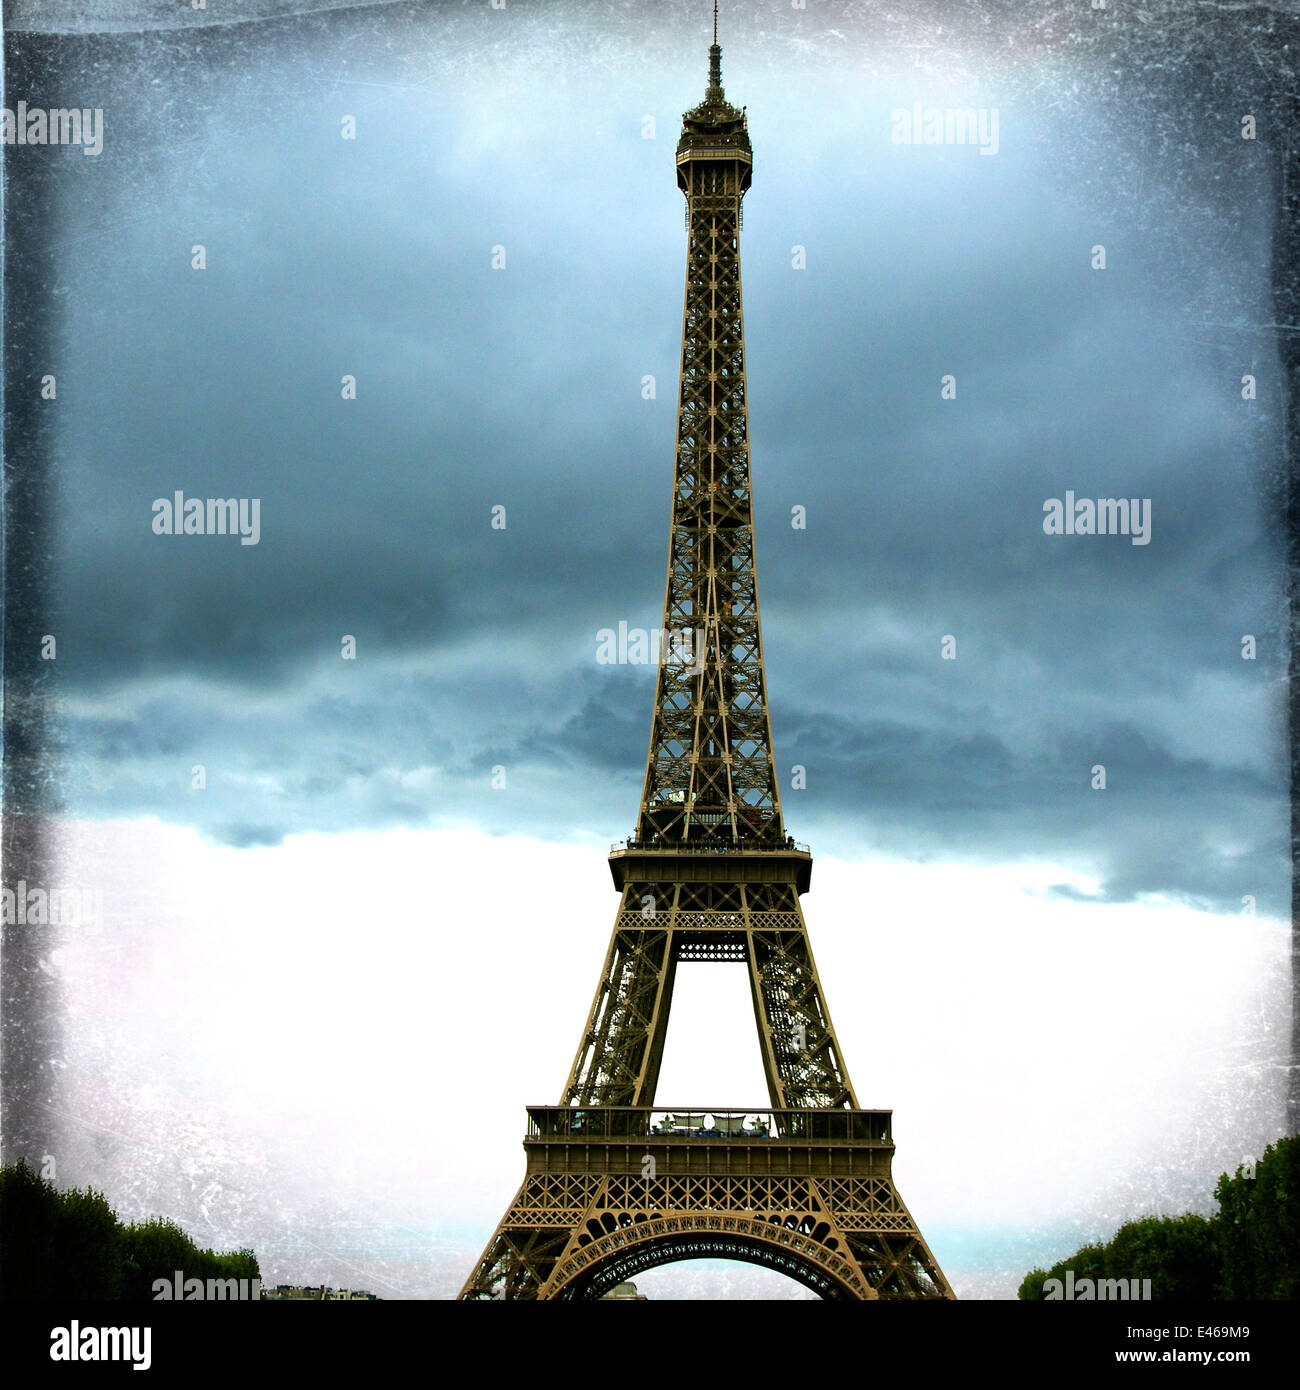 Eiffel Tower, Paris - art-effect image Stock Photo